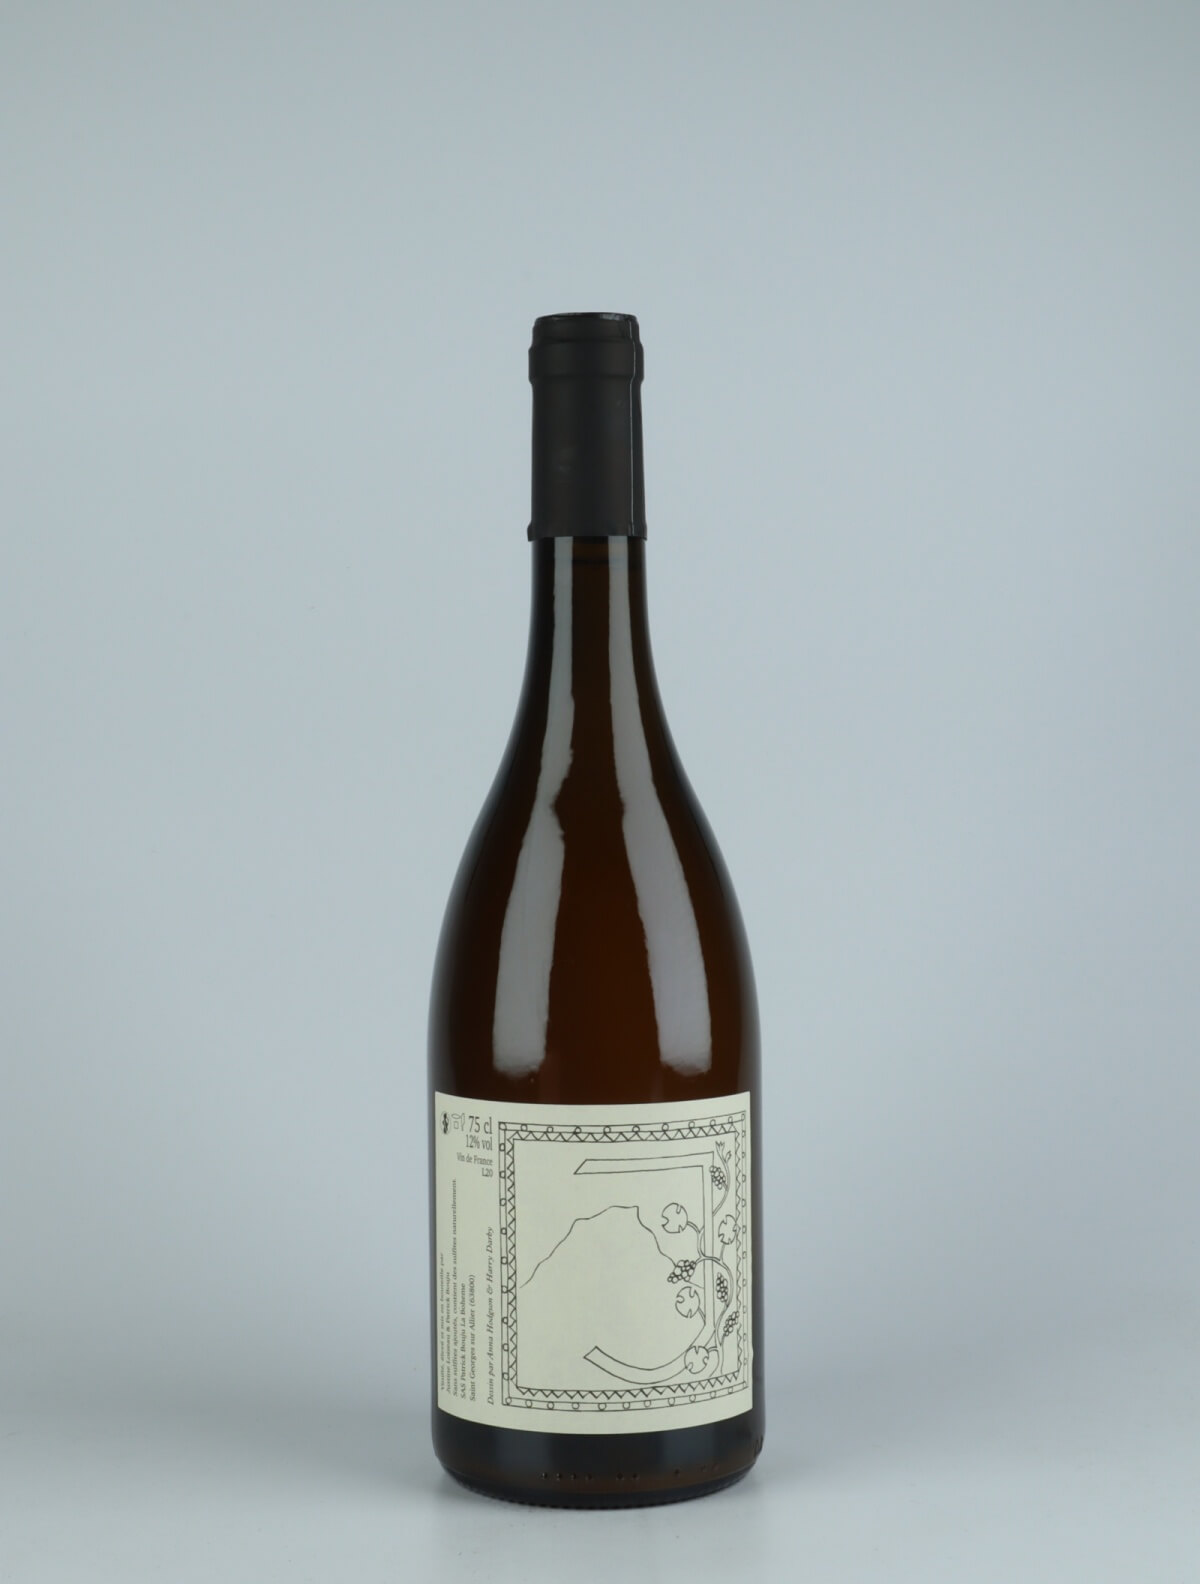 A bottle 2020 J Orange wine from Patrick Bouju, Auvergne in France